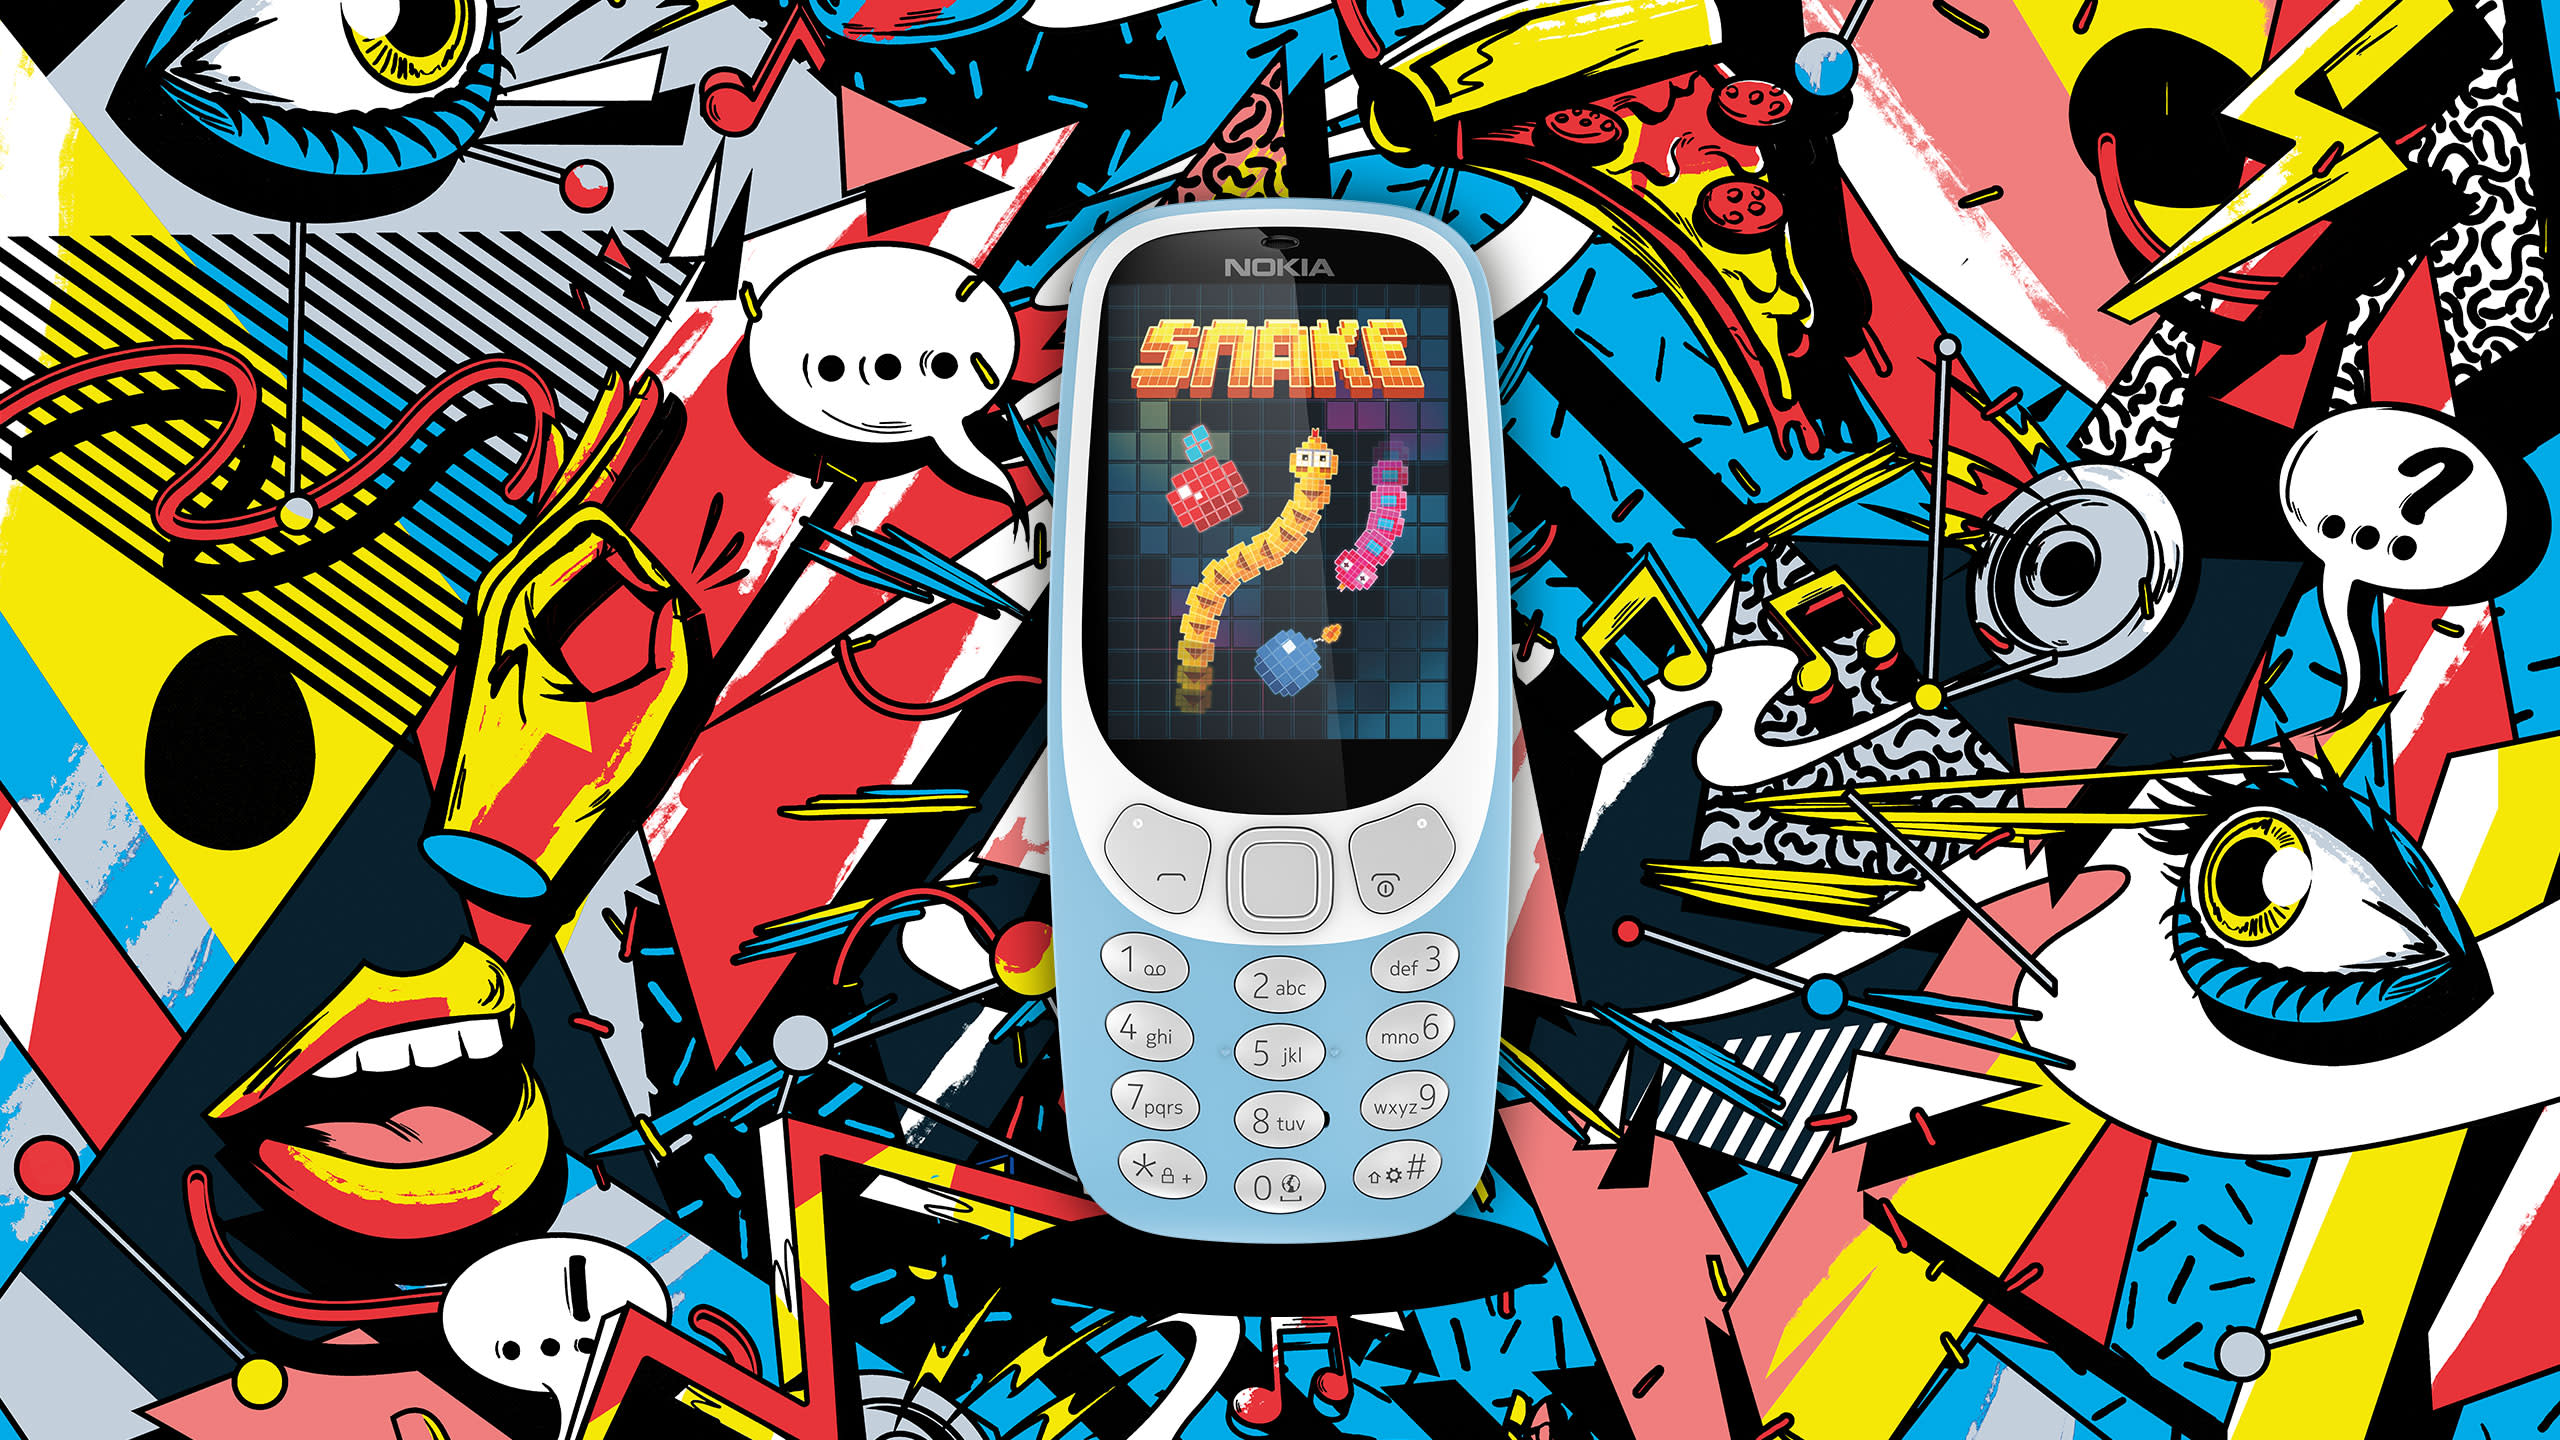 Nokia_3310_3G-the_games.jpg